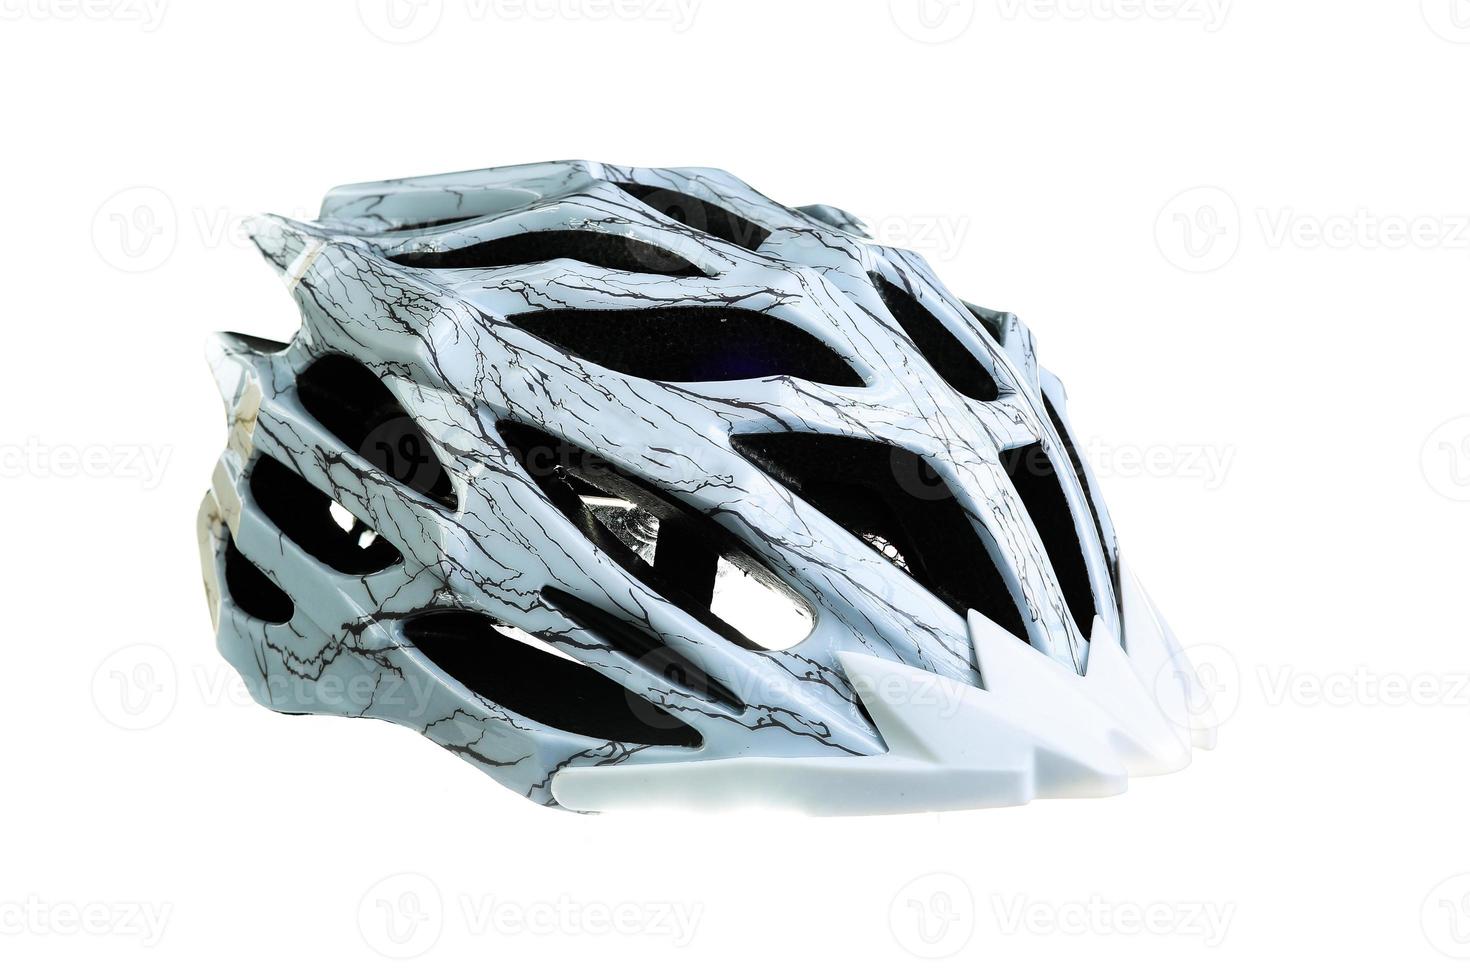 capacete de bicicleta de montanha, isolado no fundo branco foto